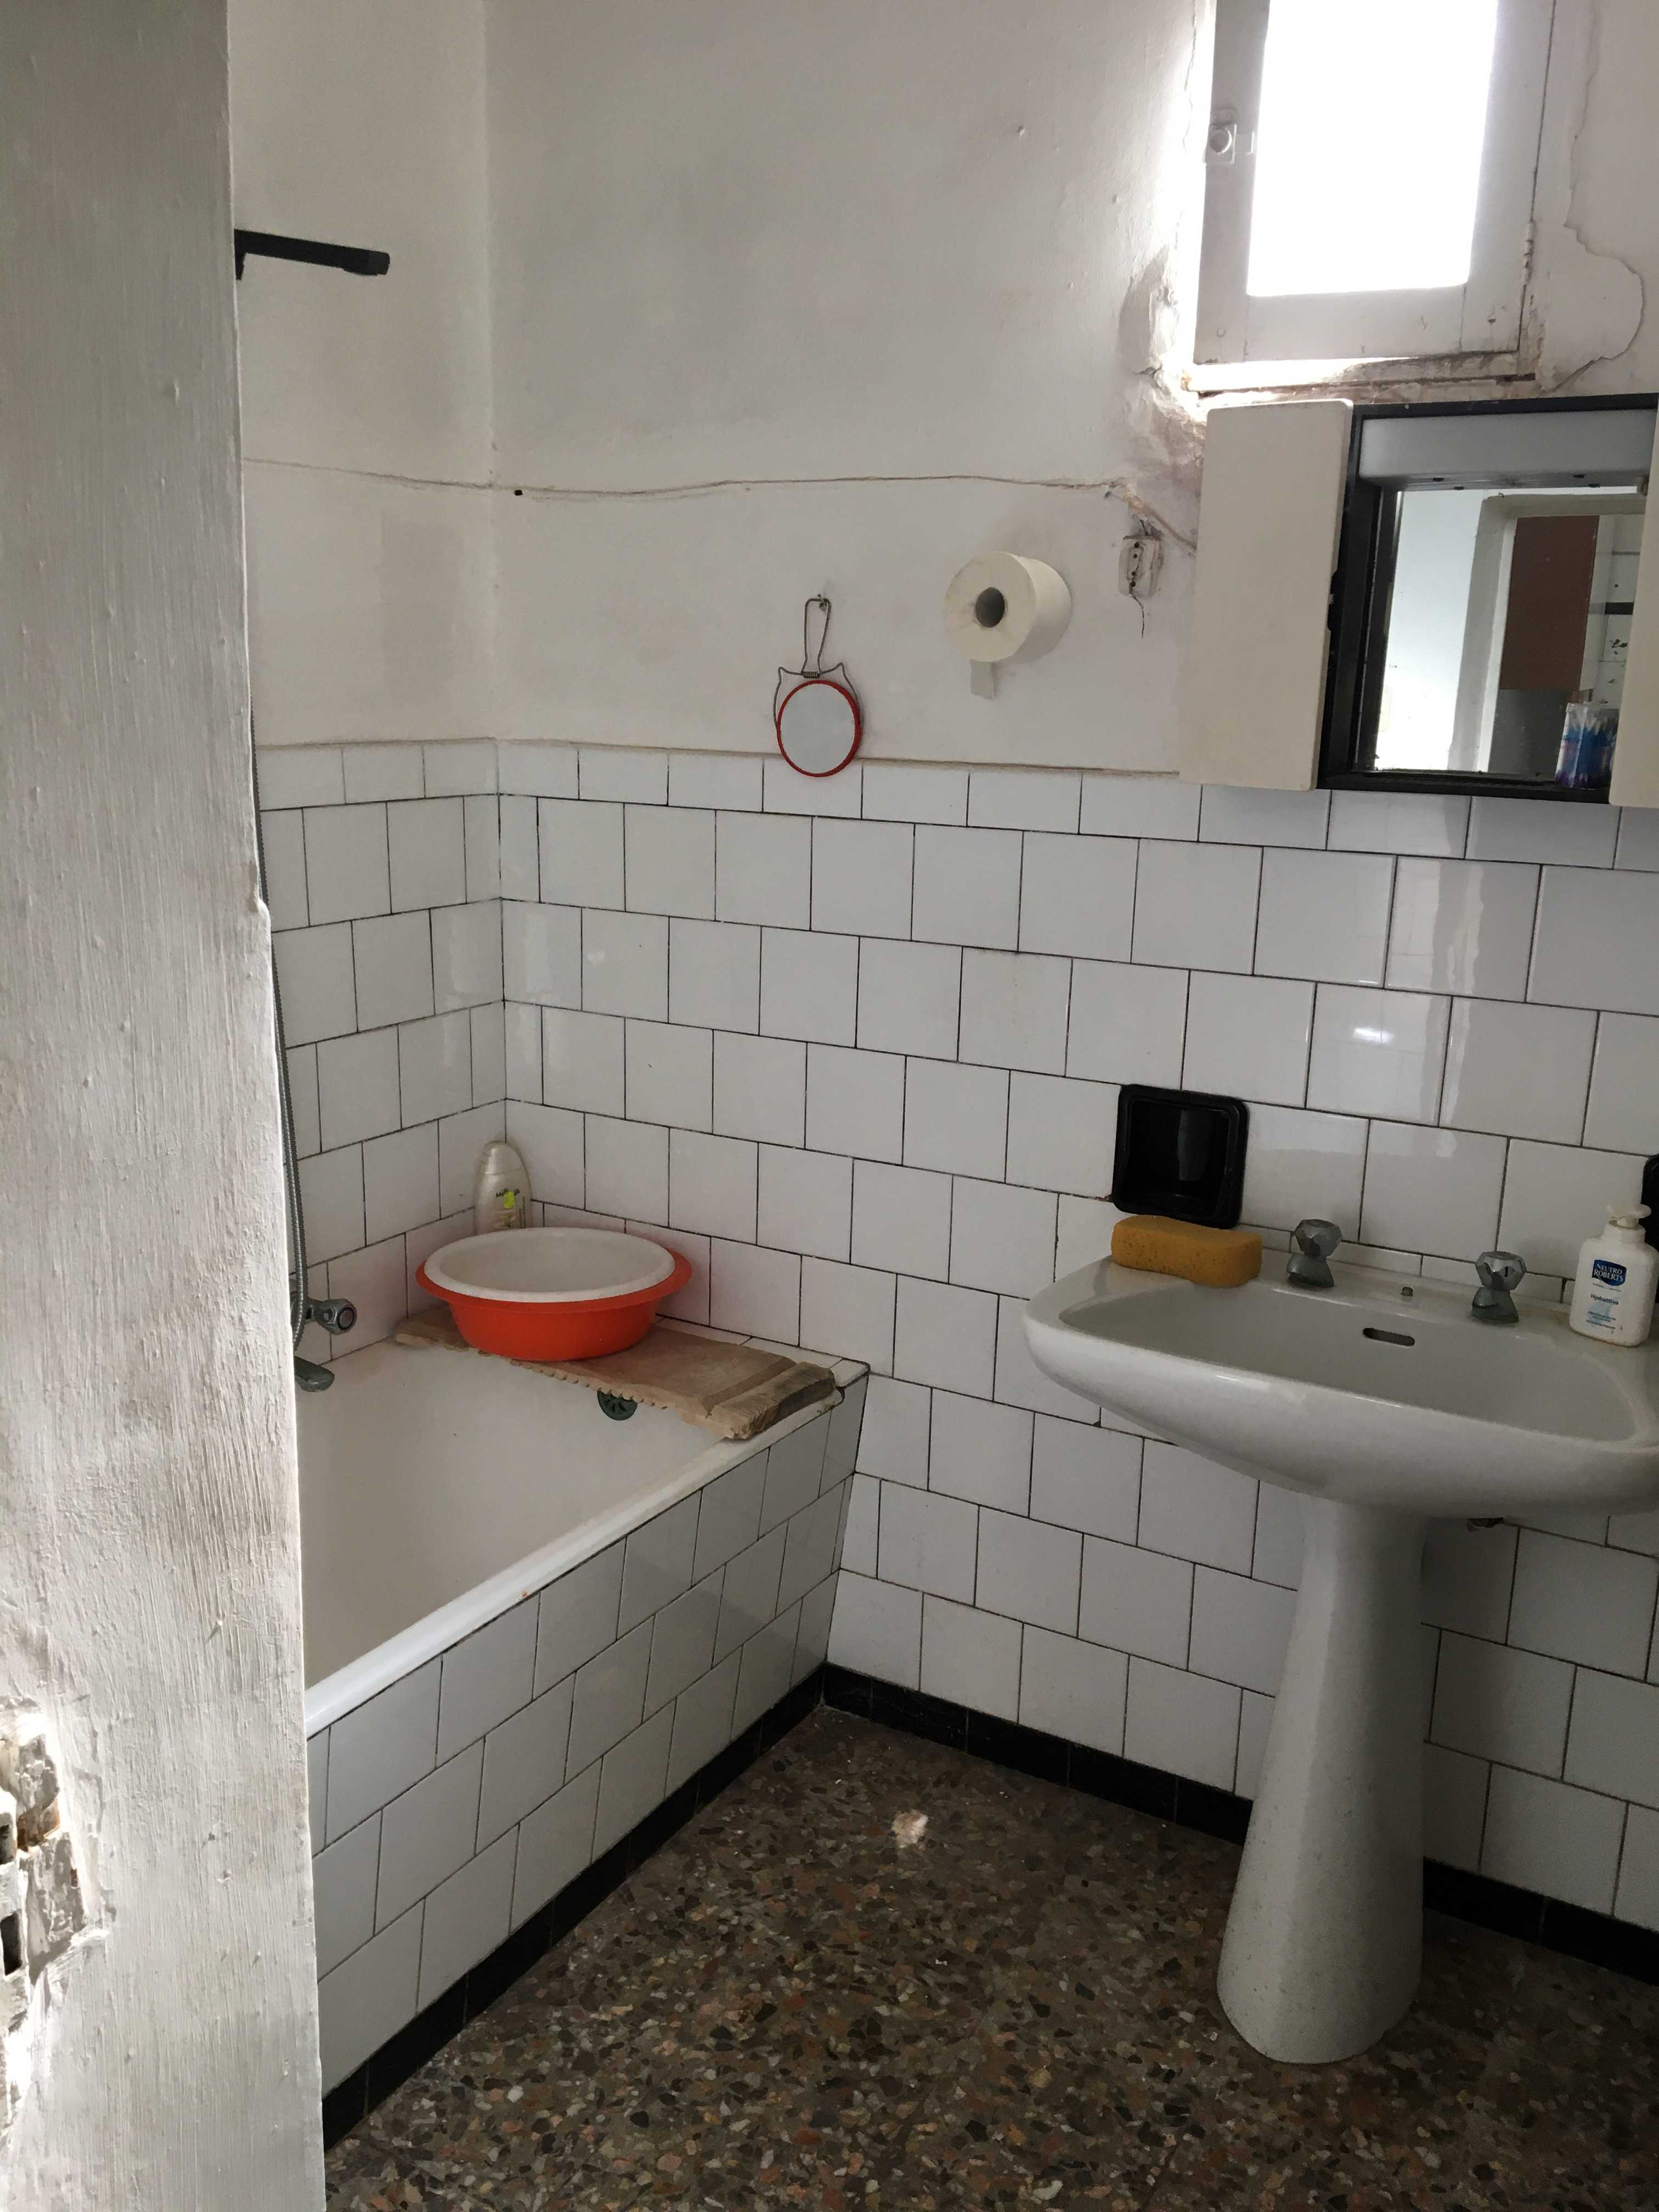 Vendite Salento: Vendita appartamento (Salve) - bagno